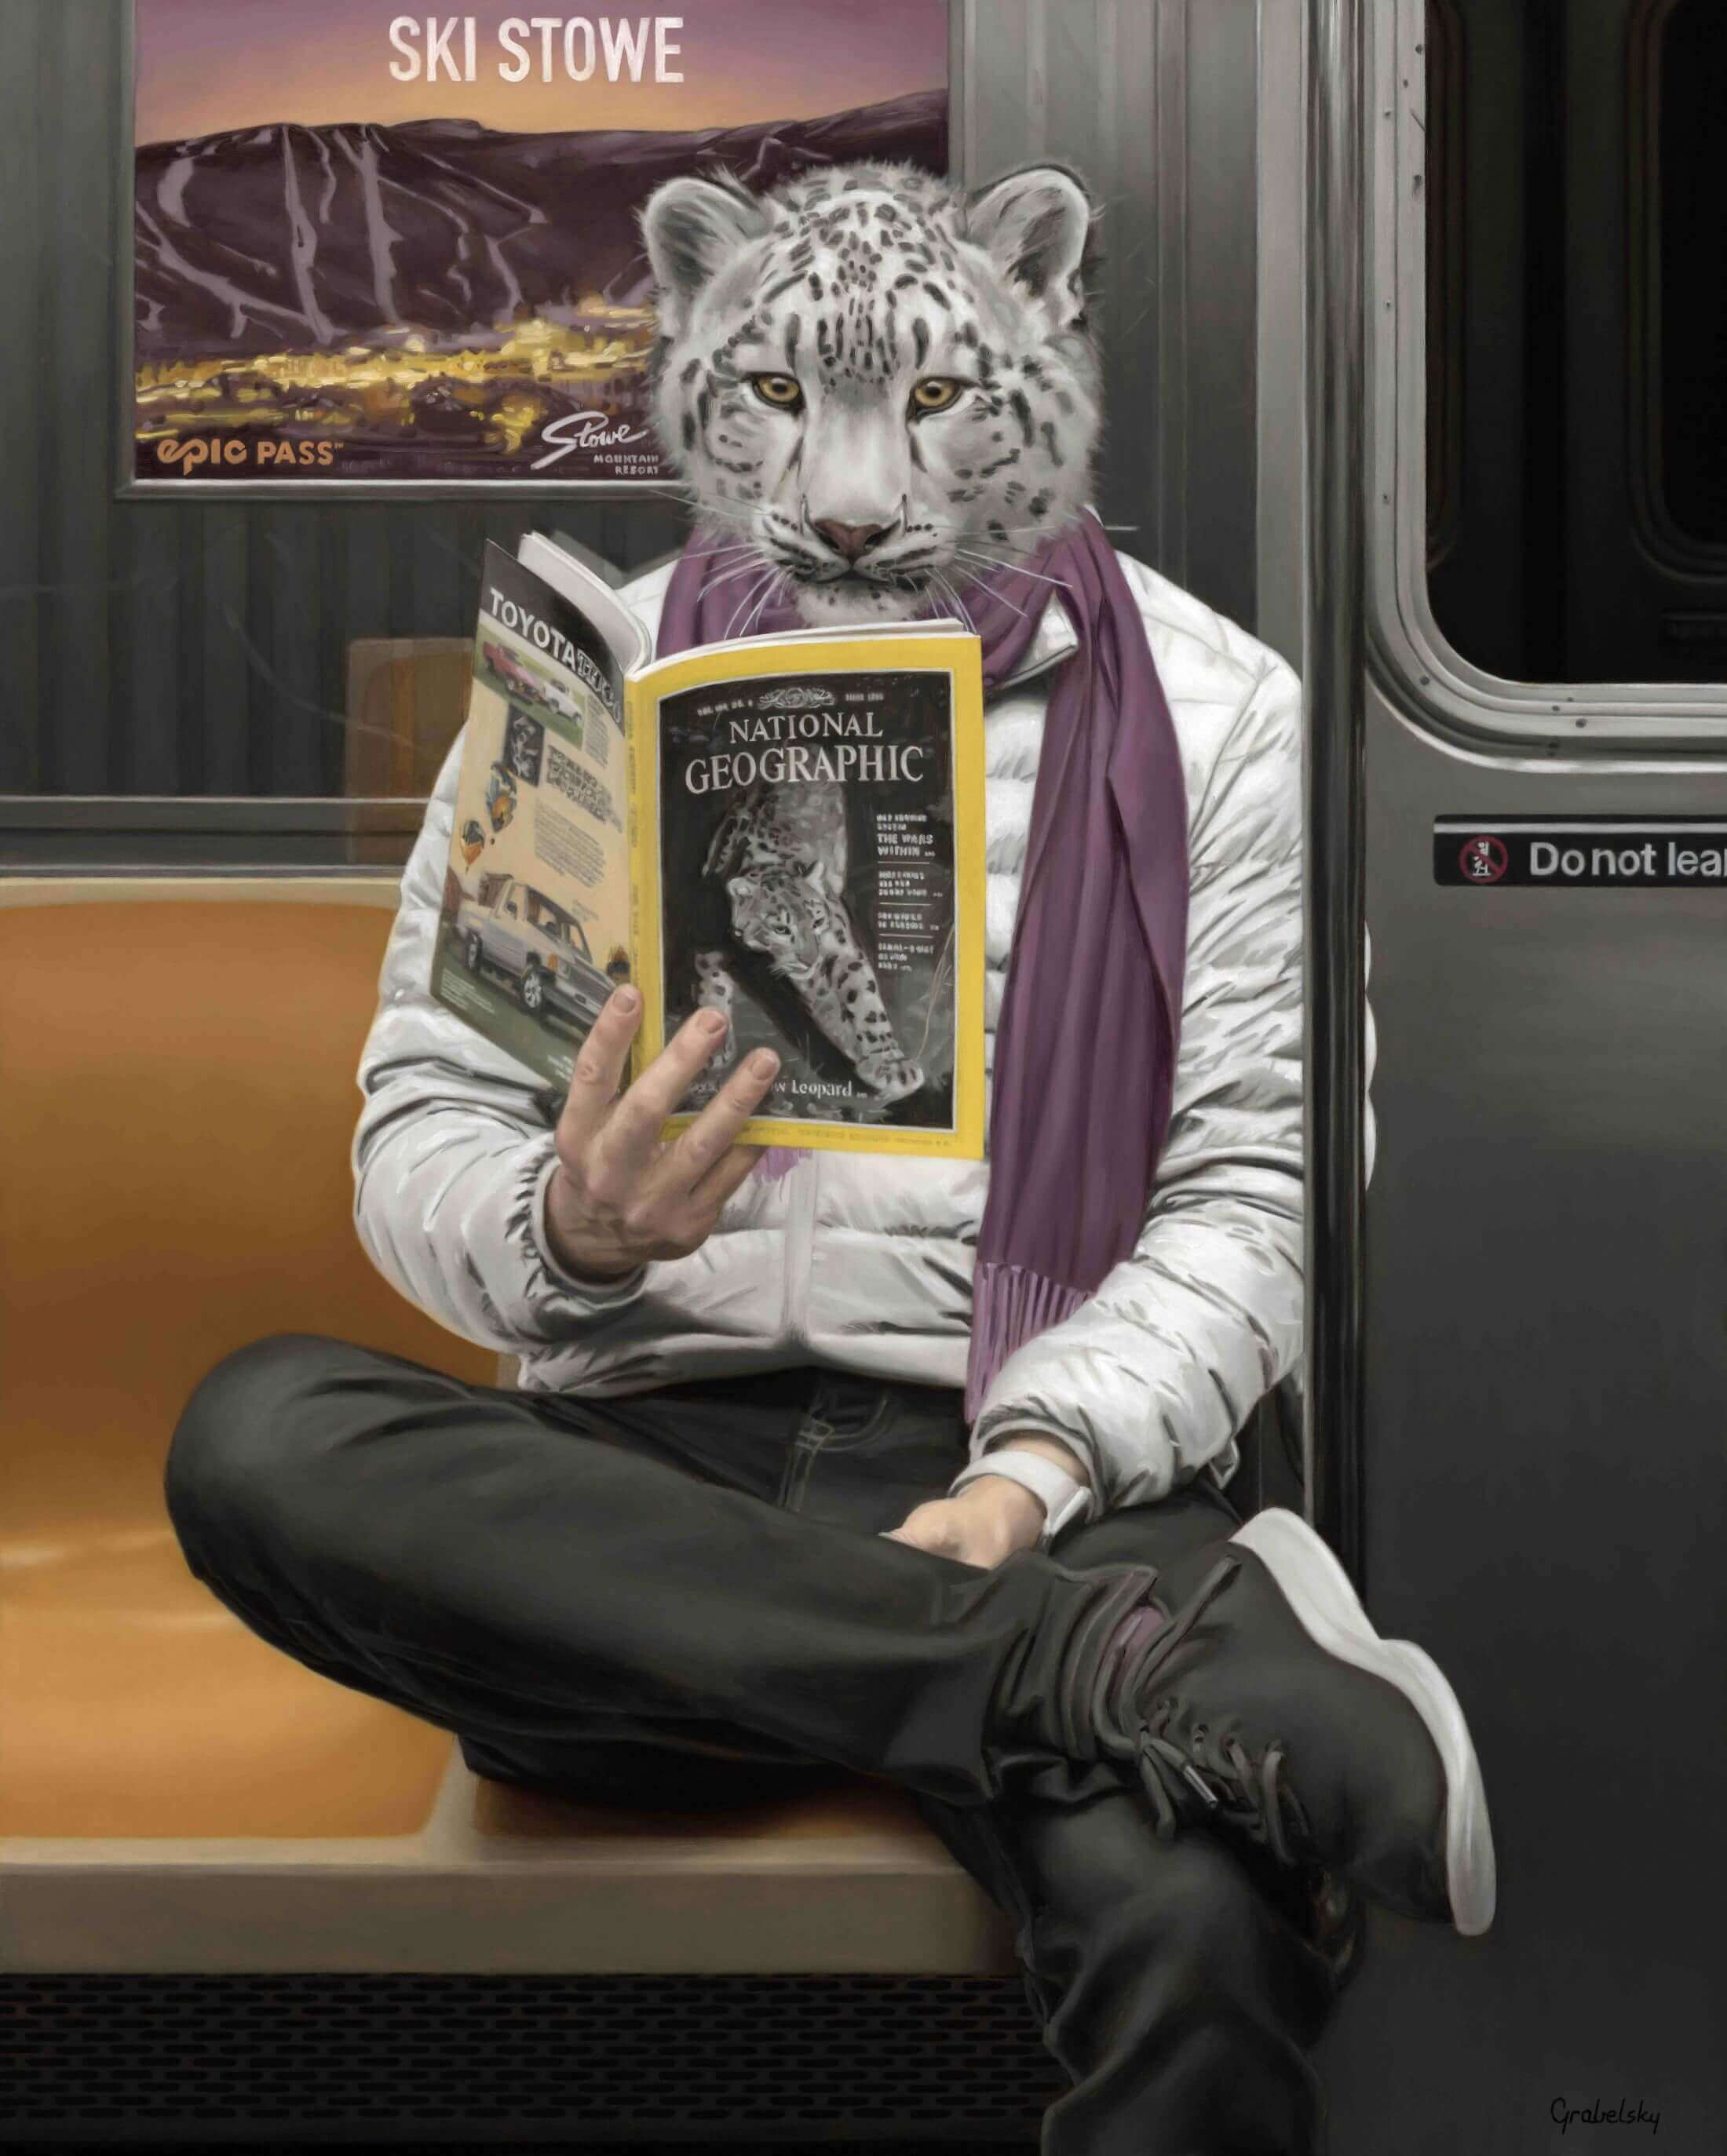 Half-human half-animal on the New York Subway